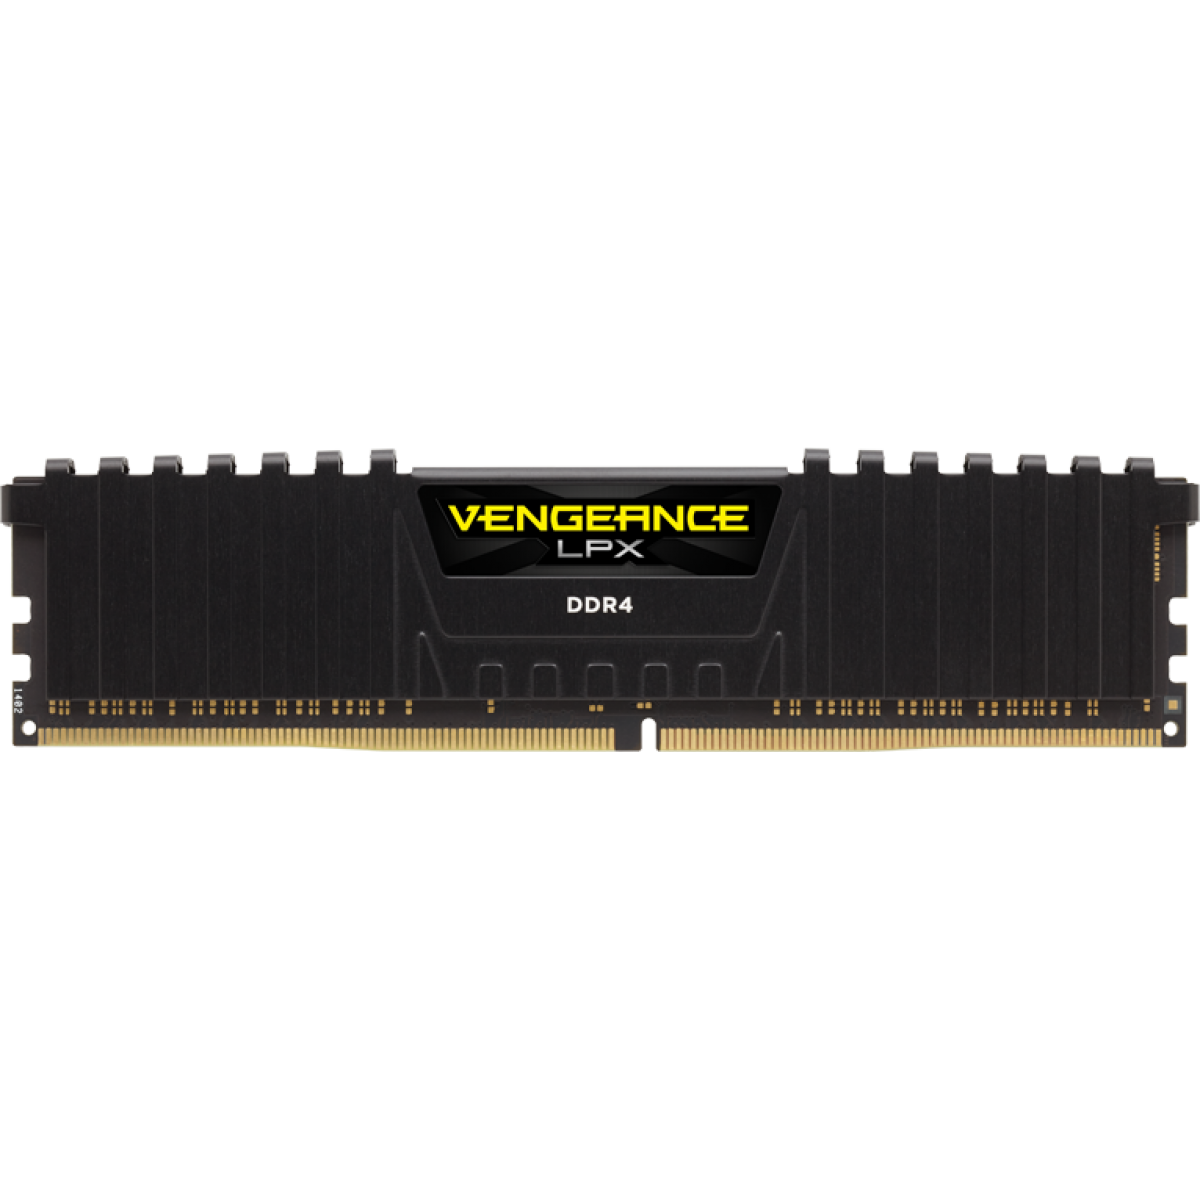 Memória DDR4 Corsair Vengeance LPX, 16GB (2x8GB) 2400MHz, Black, CMK16GX4M2A2400C14